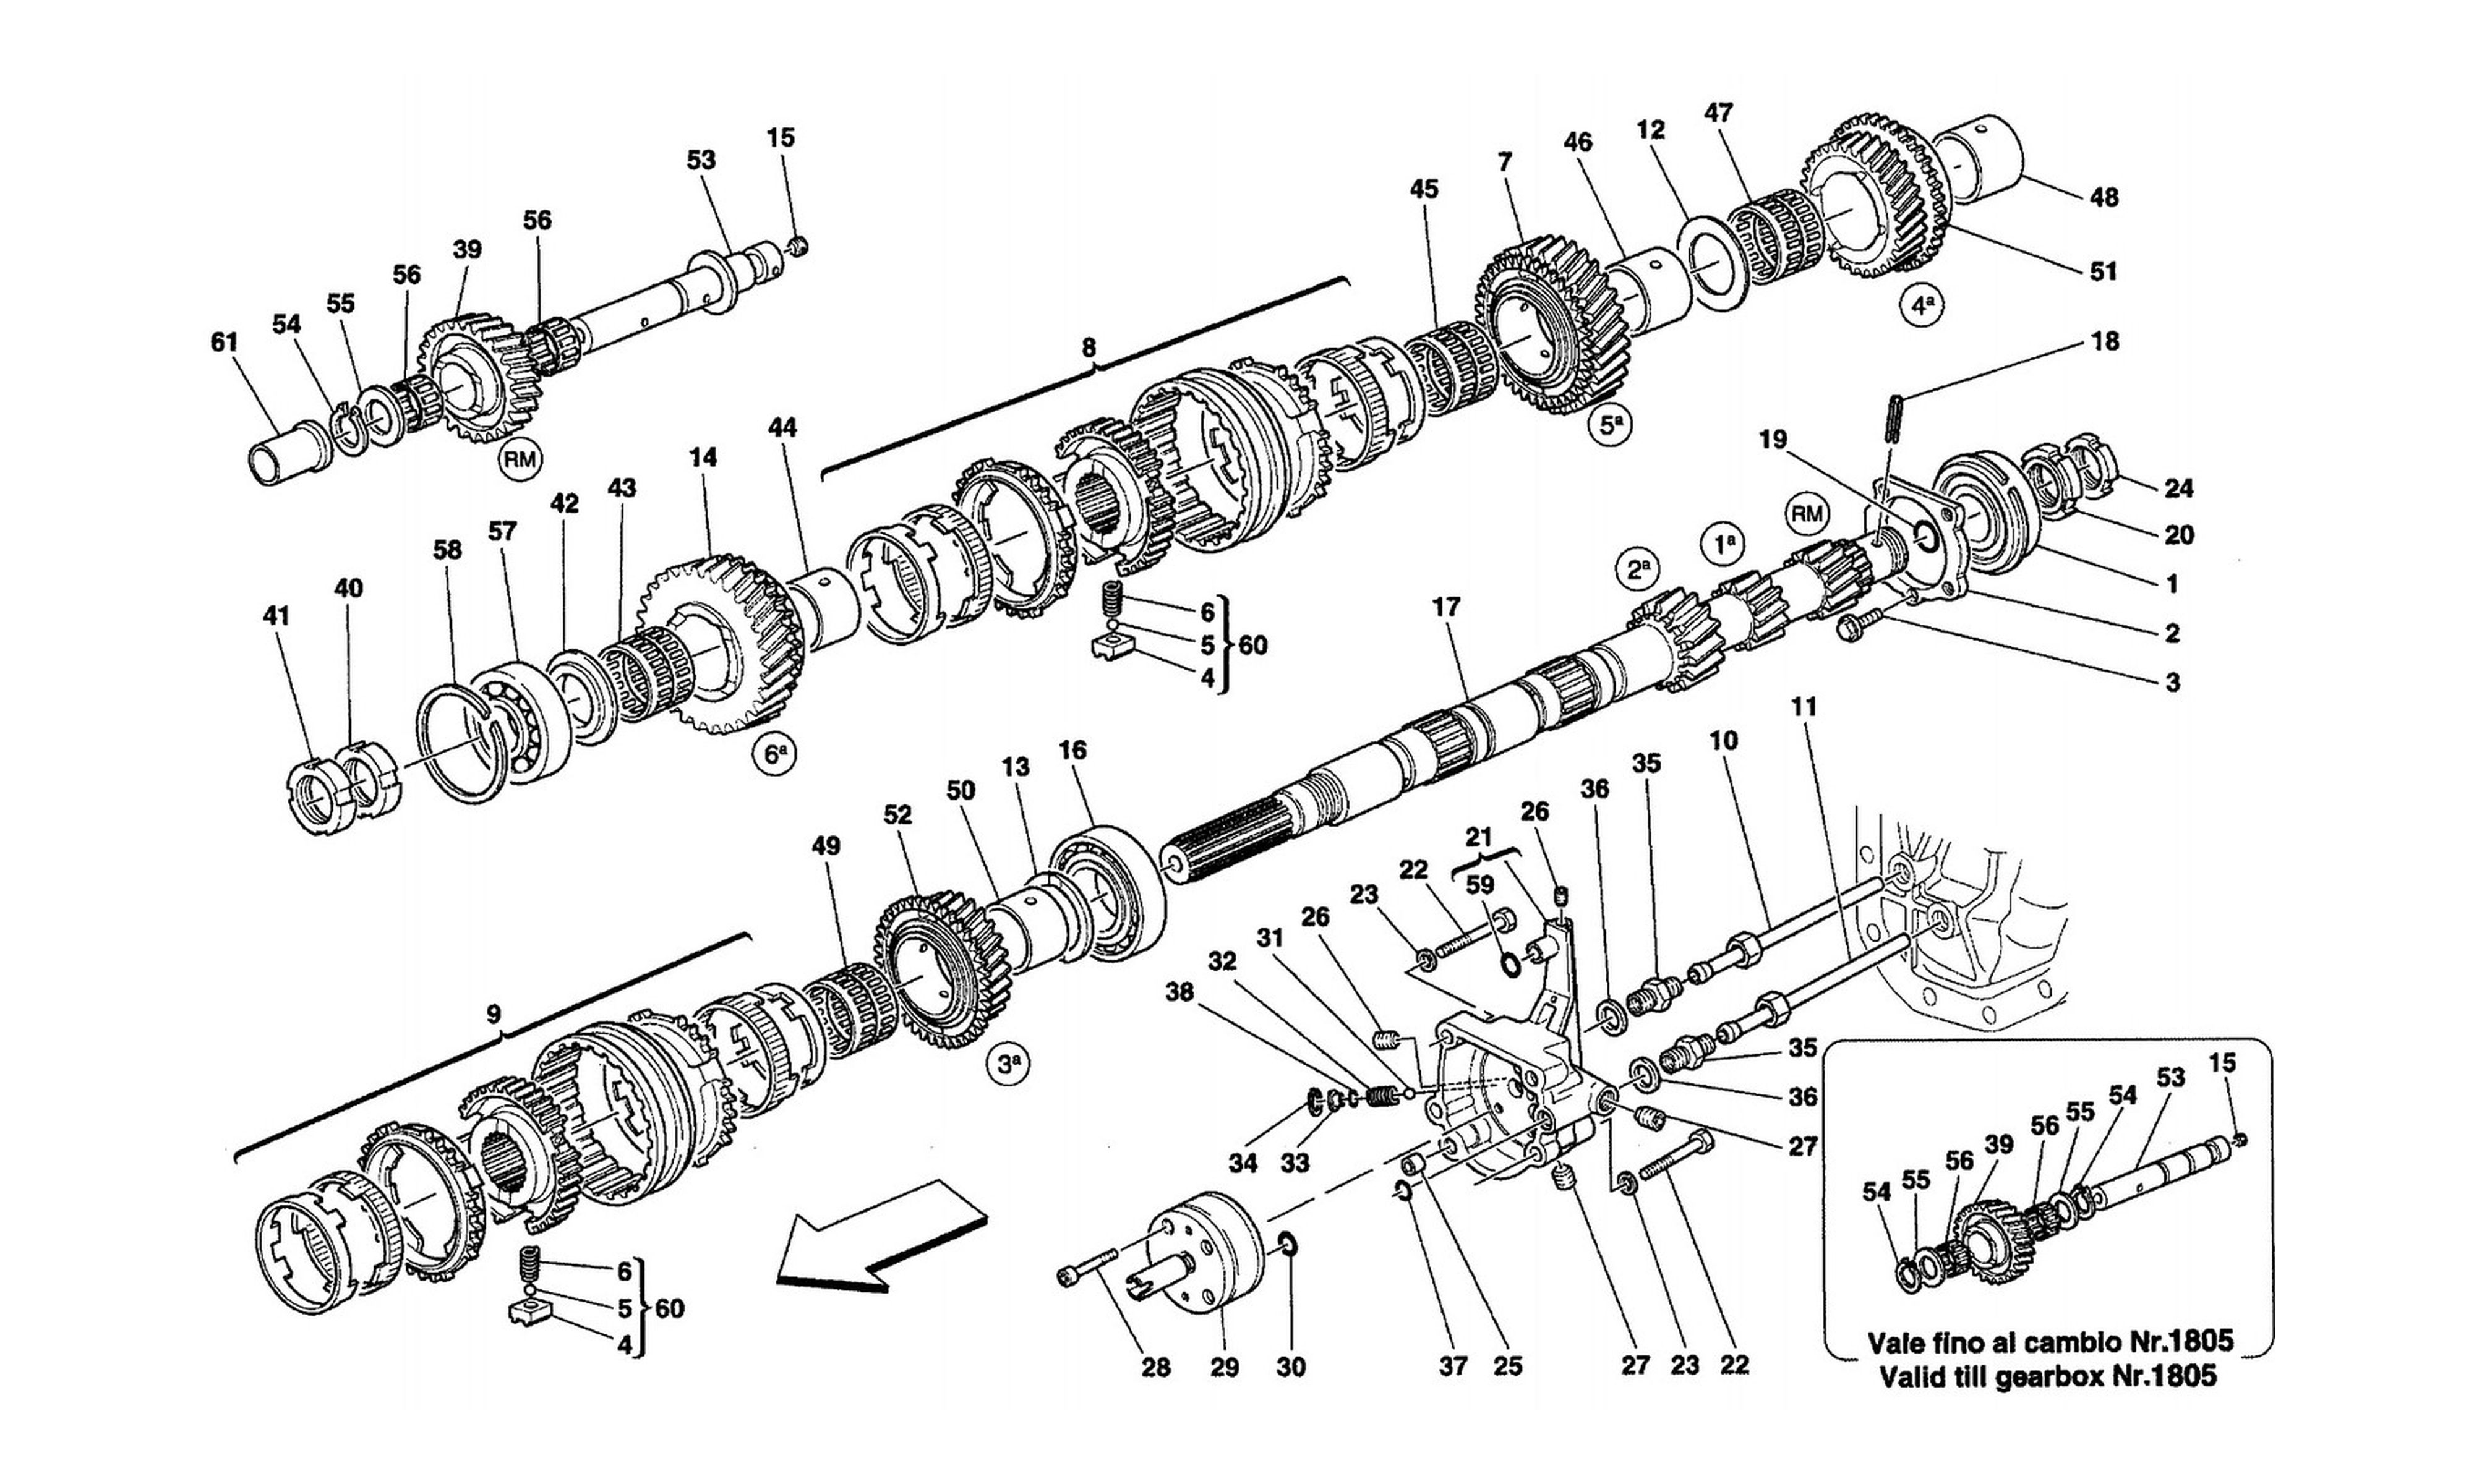 Schematic: Main Shaft Gears And Clutch Oil Pump